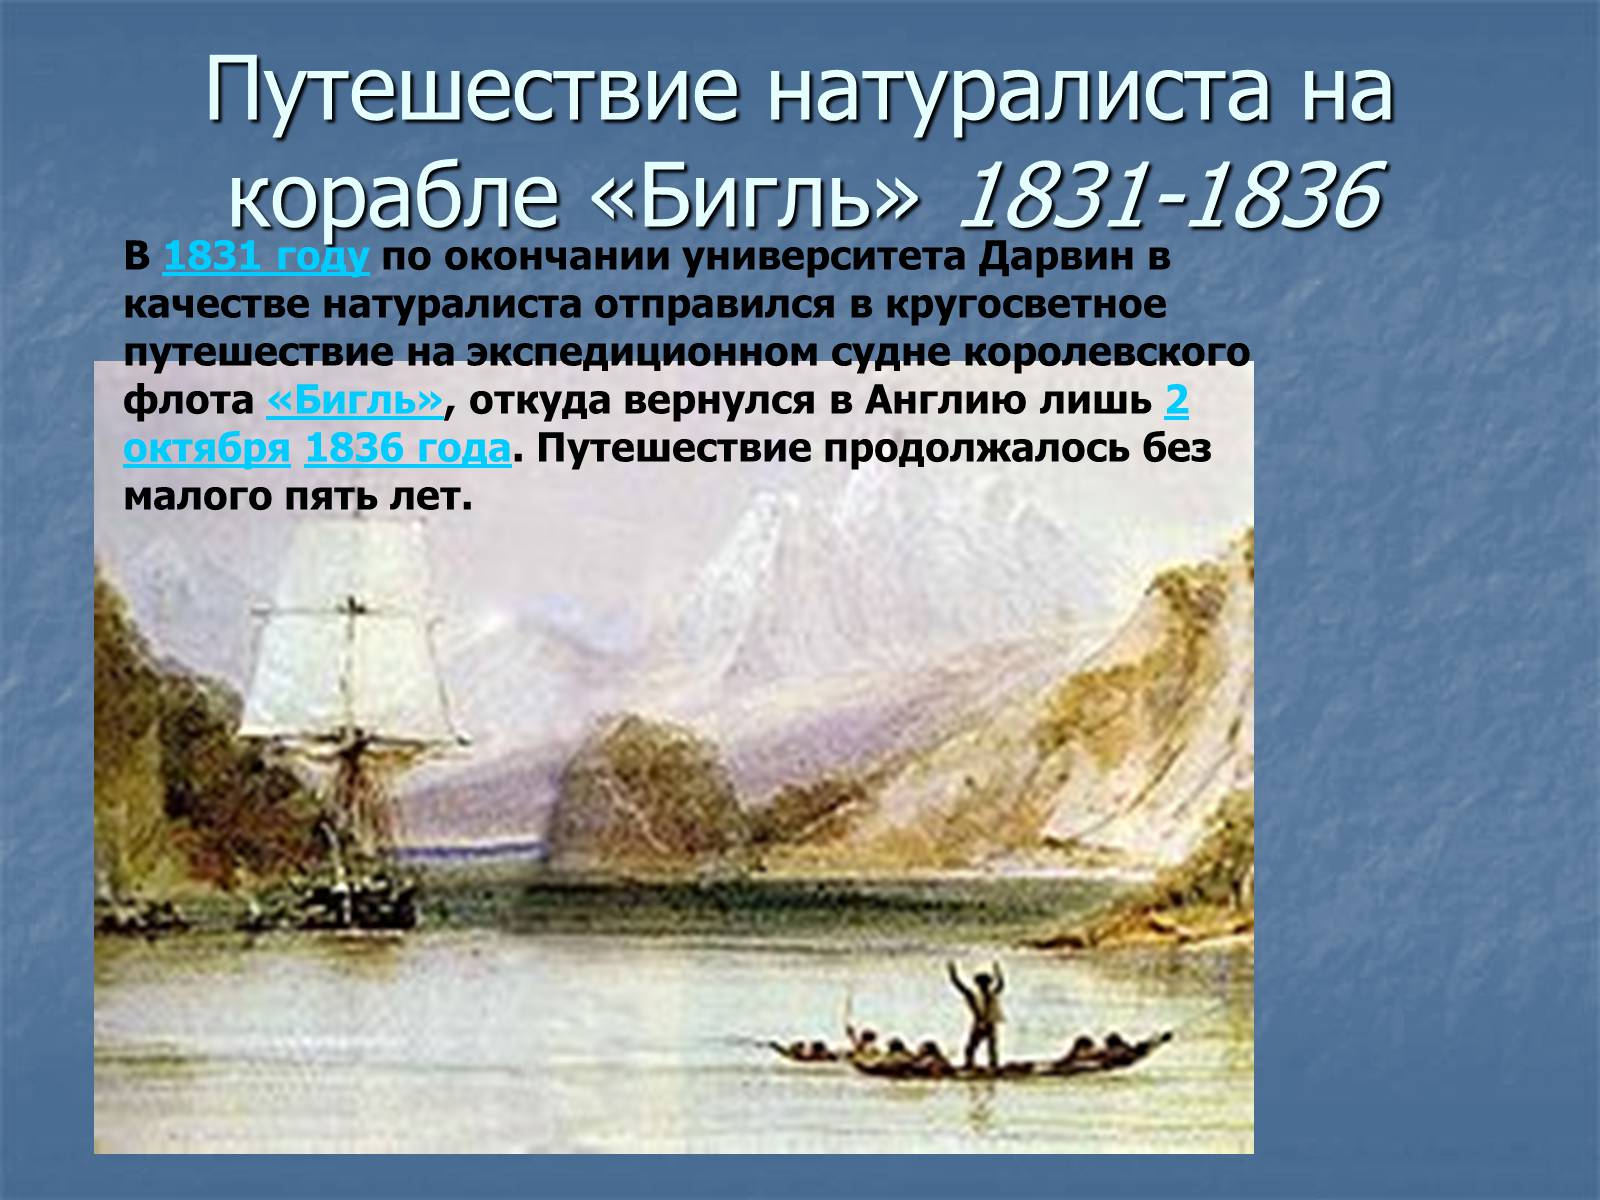 Ч дарвин кругосветное путешествие. Путешествие натуралиста на корабле «Бигль» (1831—1836). Кругосветное путешествие Дарвина на корабле.